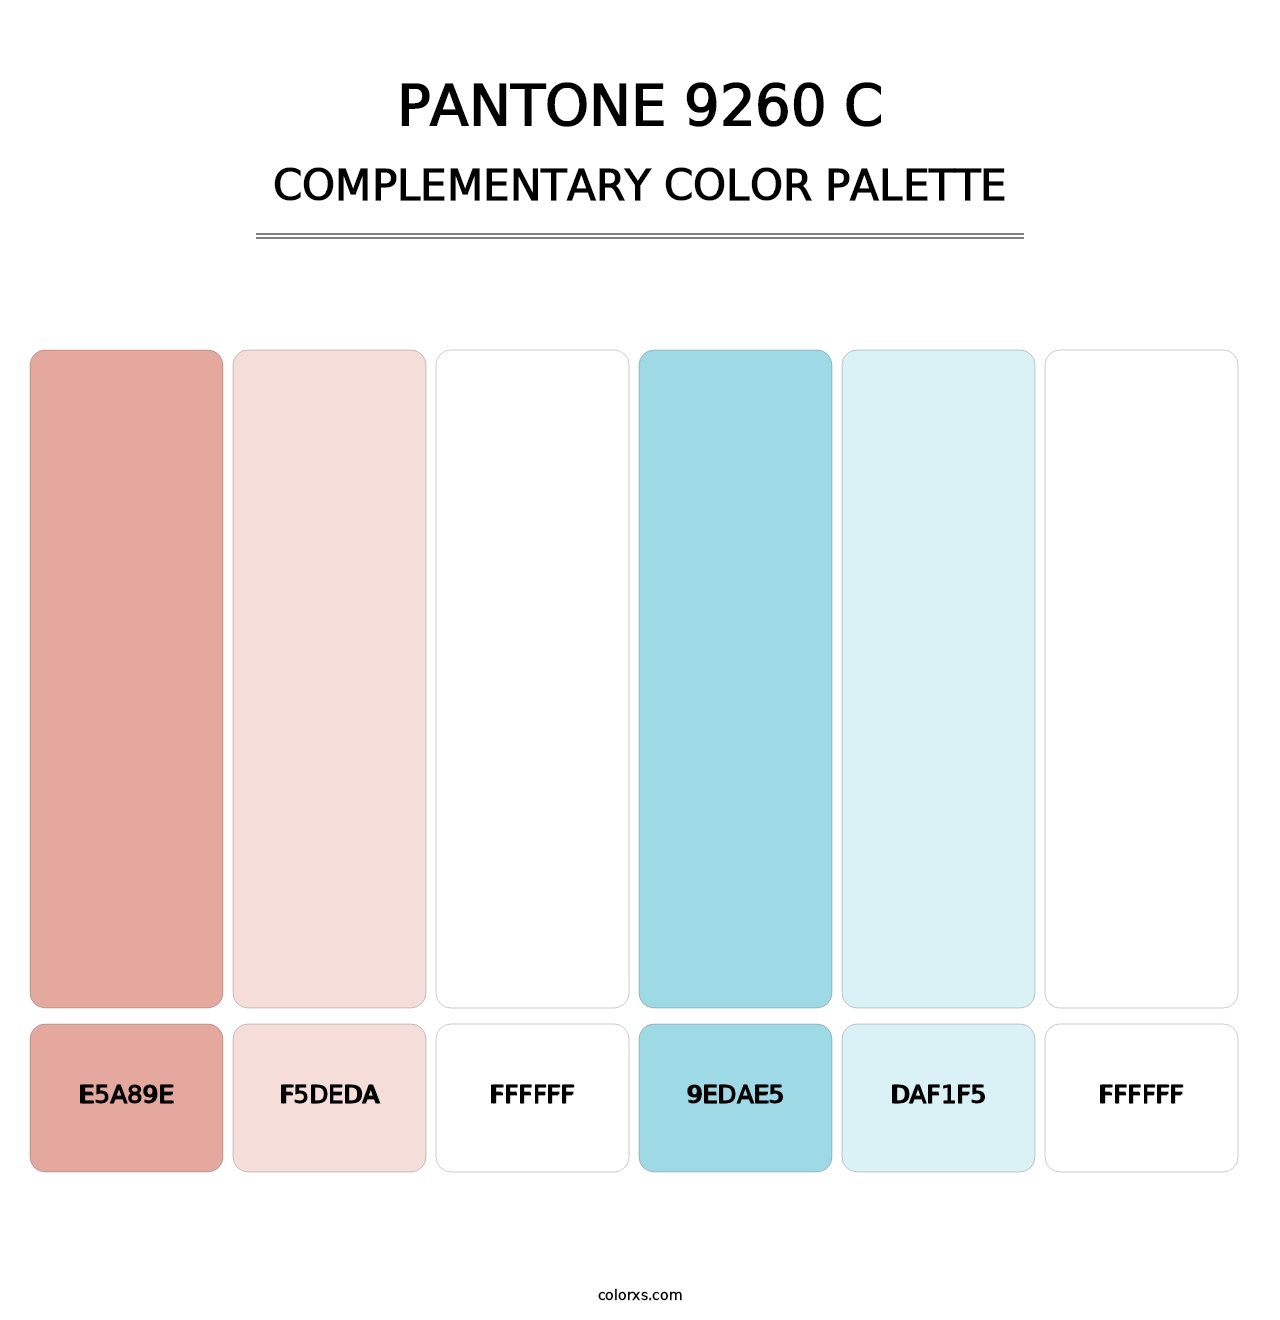 PANTONE 9260 C - Complementary Color Palette